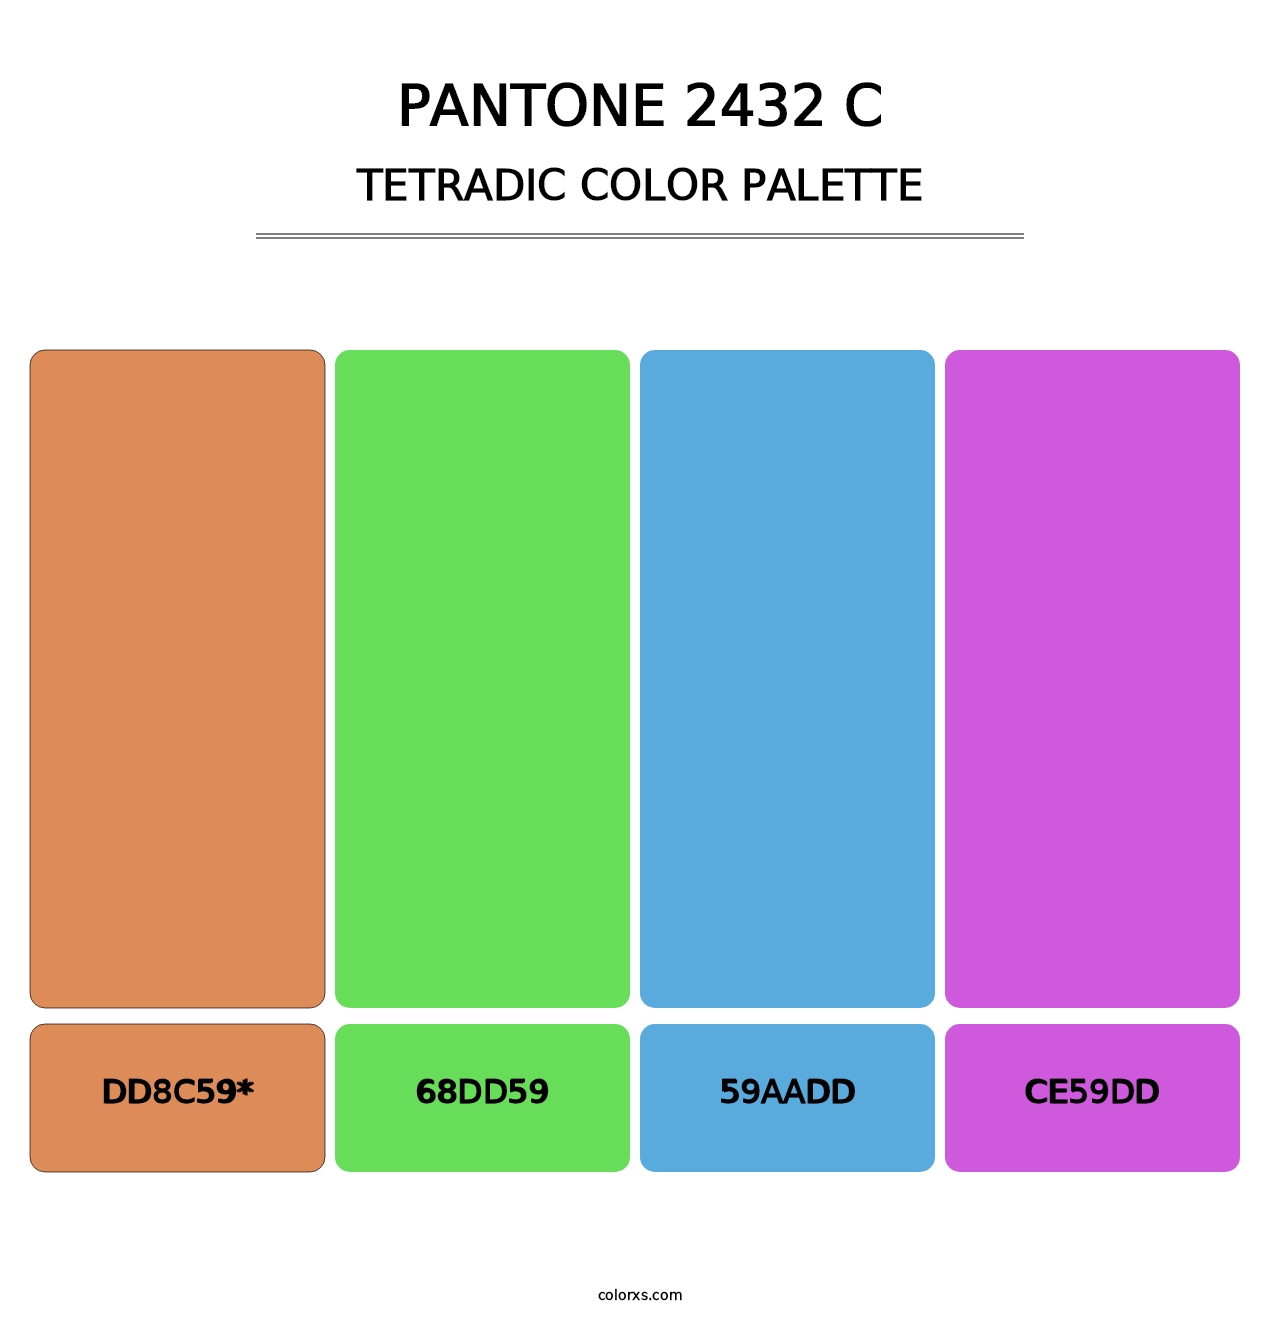 PANTONE 2432 C - Tetradic Color Palette